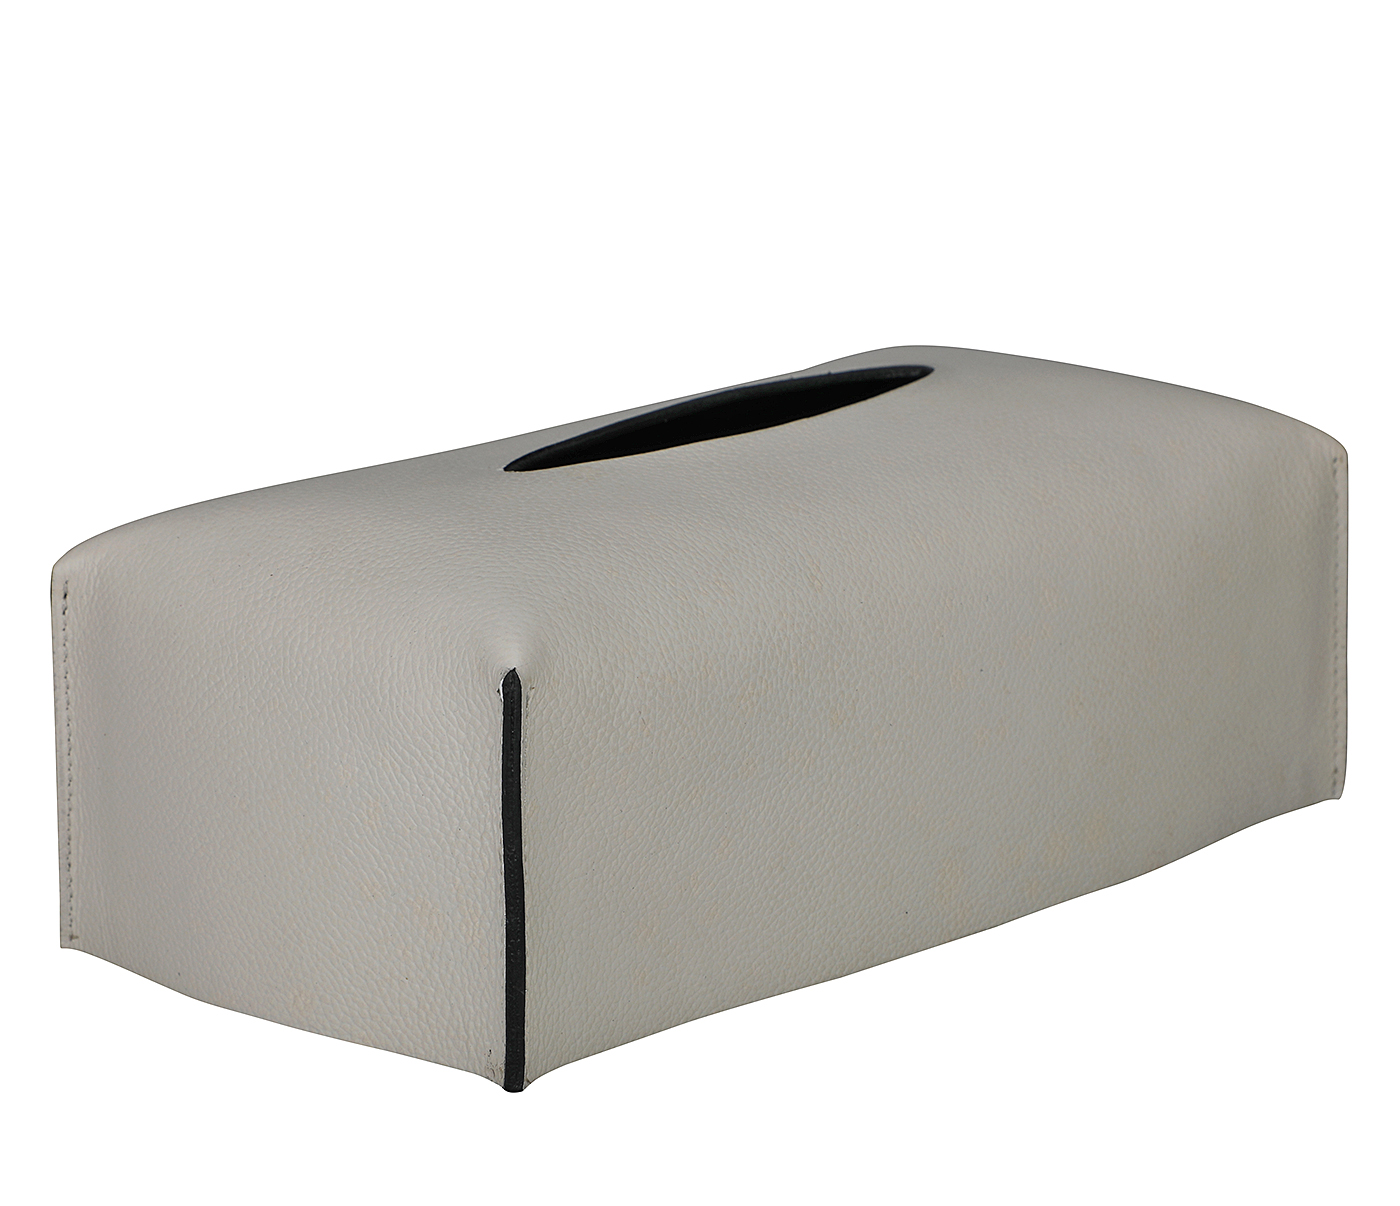 Tissue box-Adamis-Offwhite Colour Pure Leather Tissue Box - Offwhite